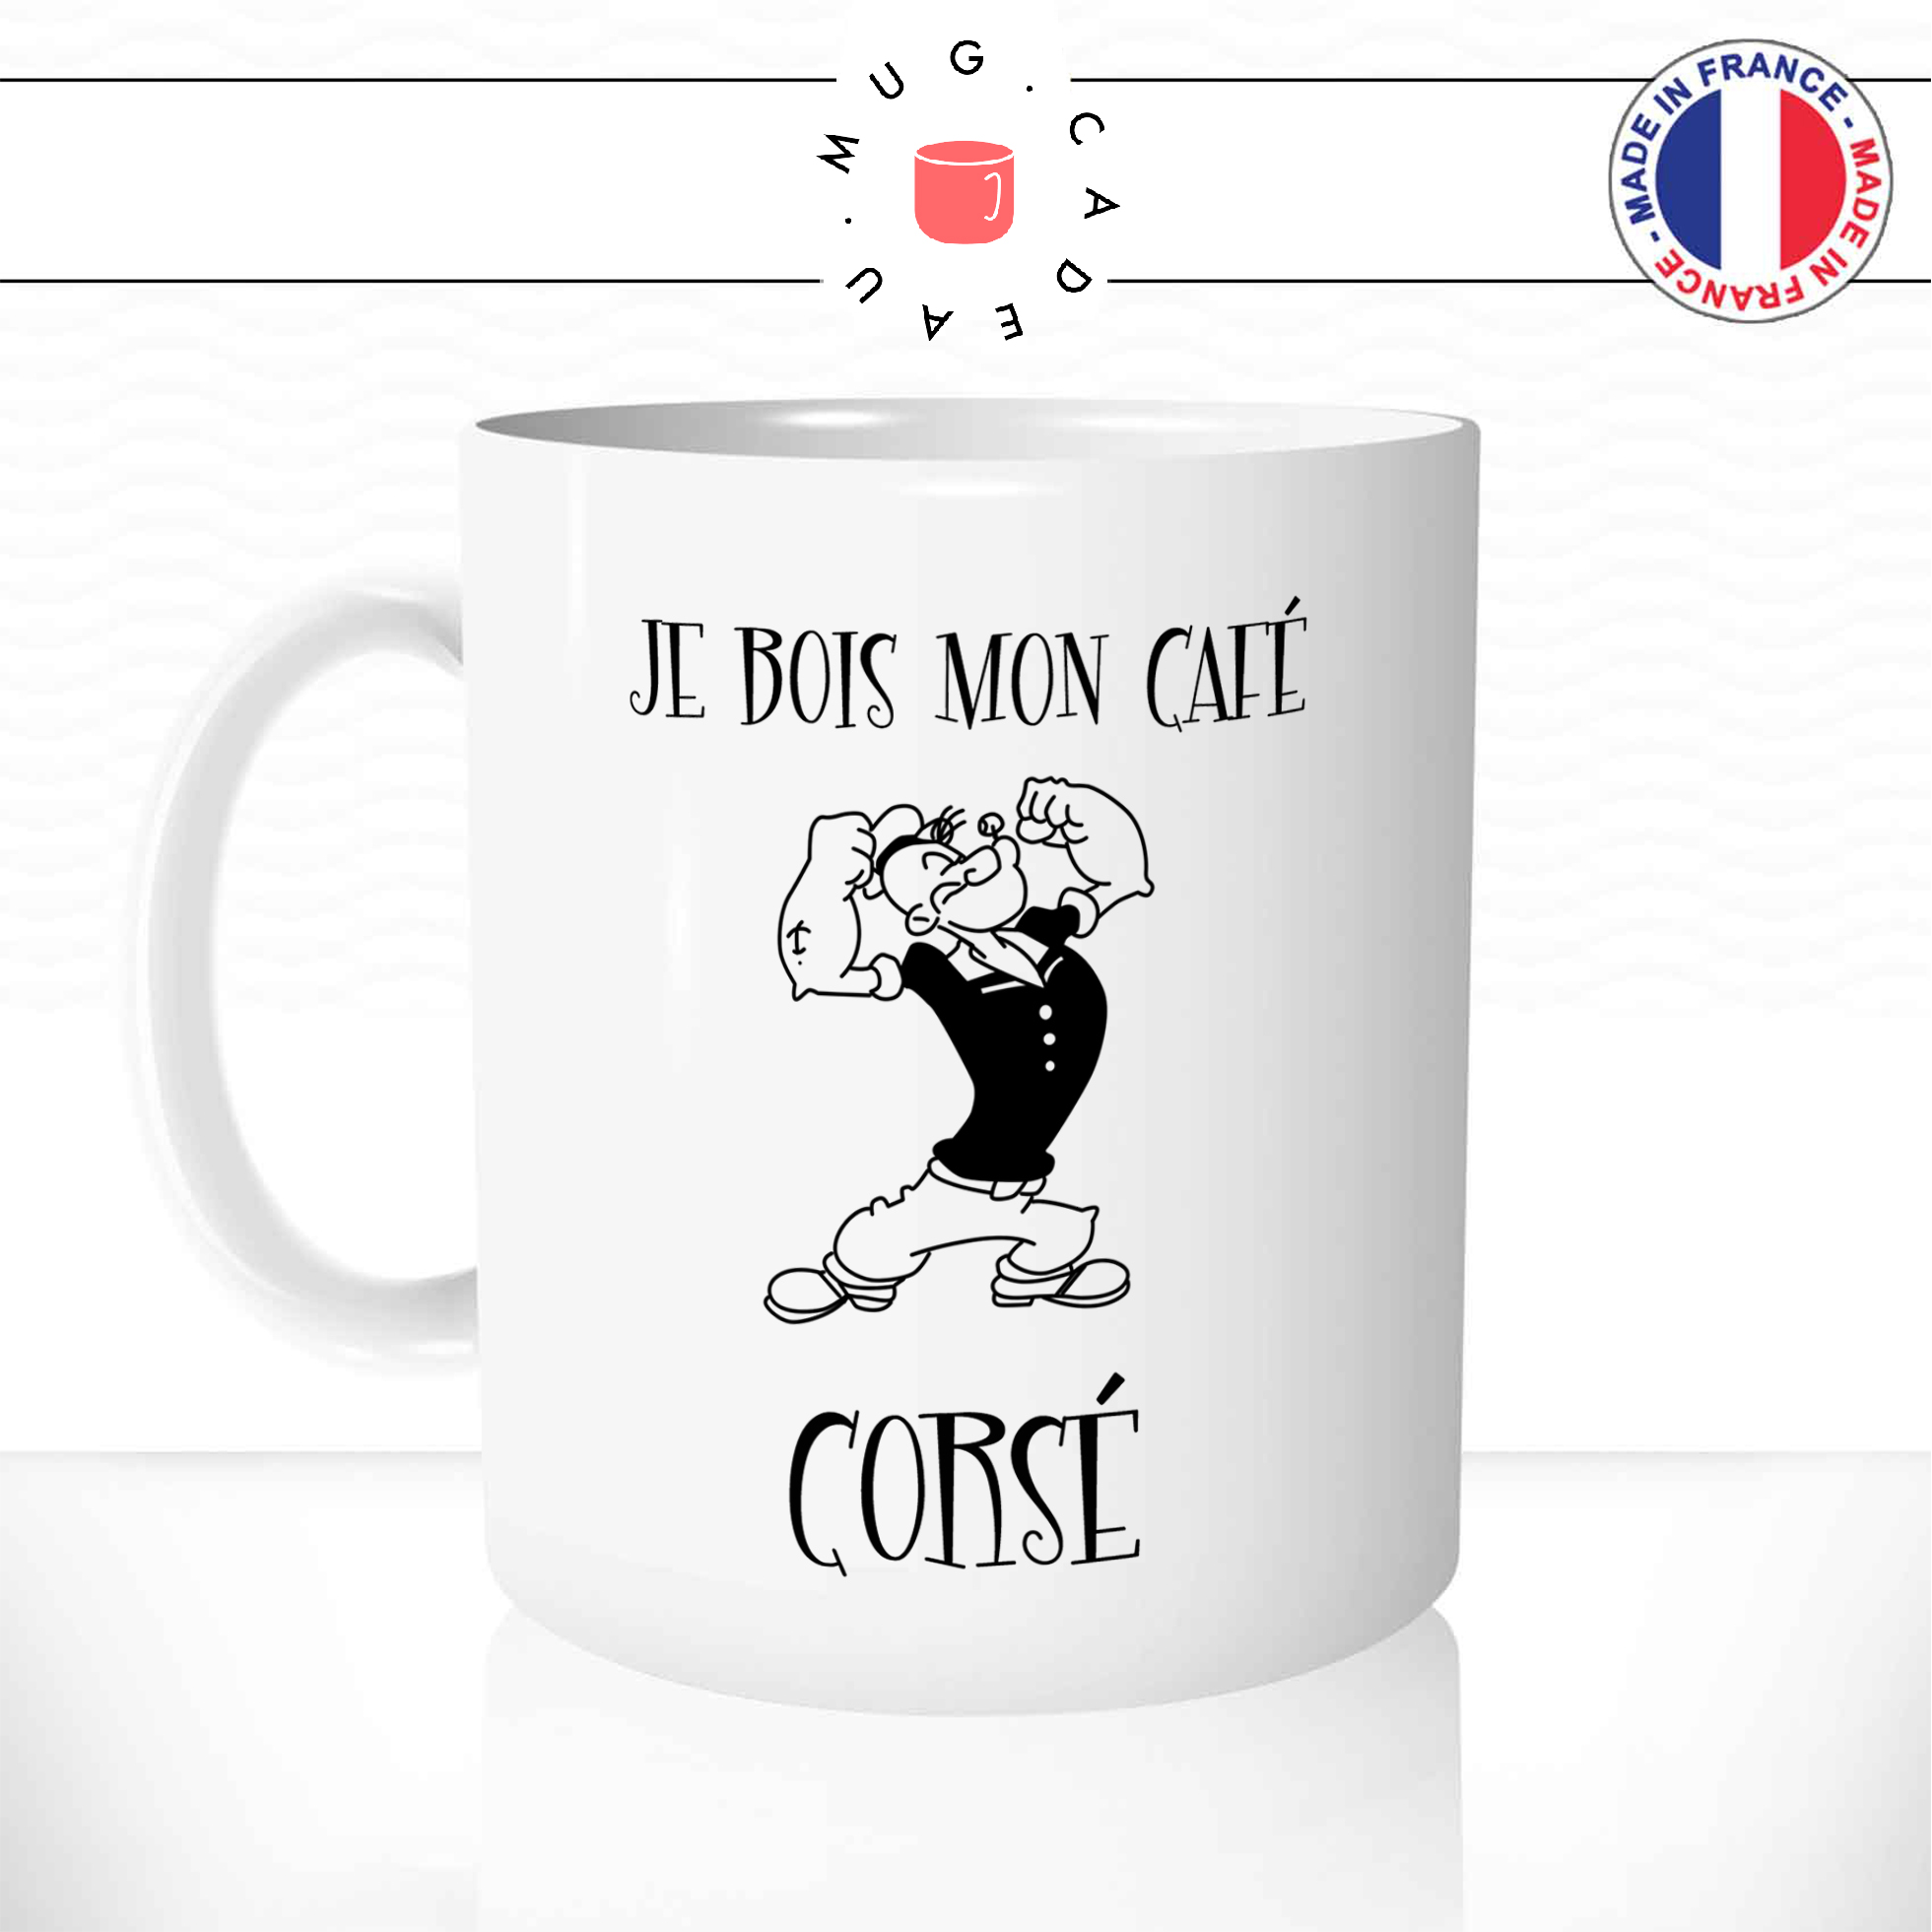 Mug Popeye Café Corsé